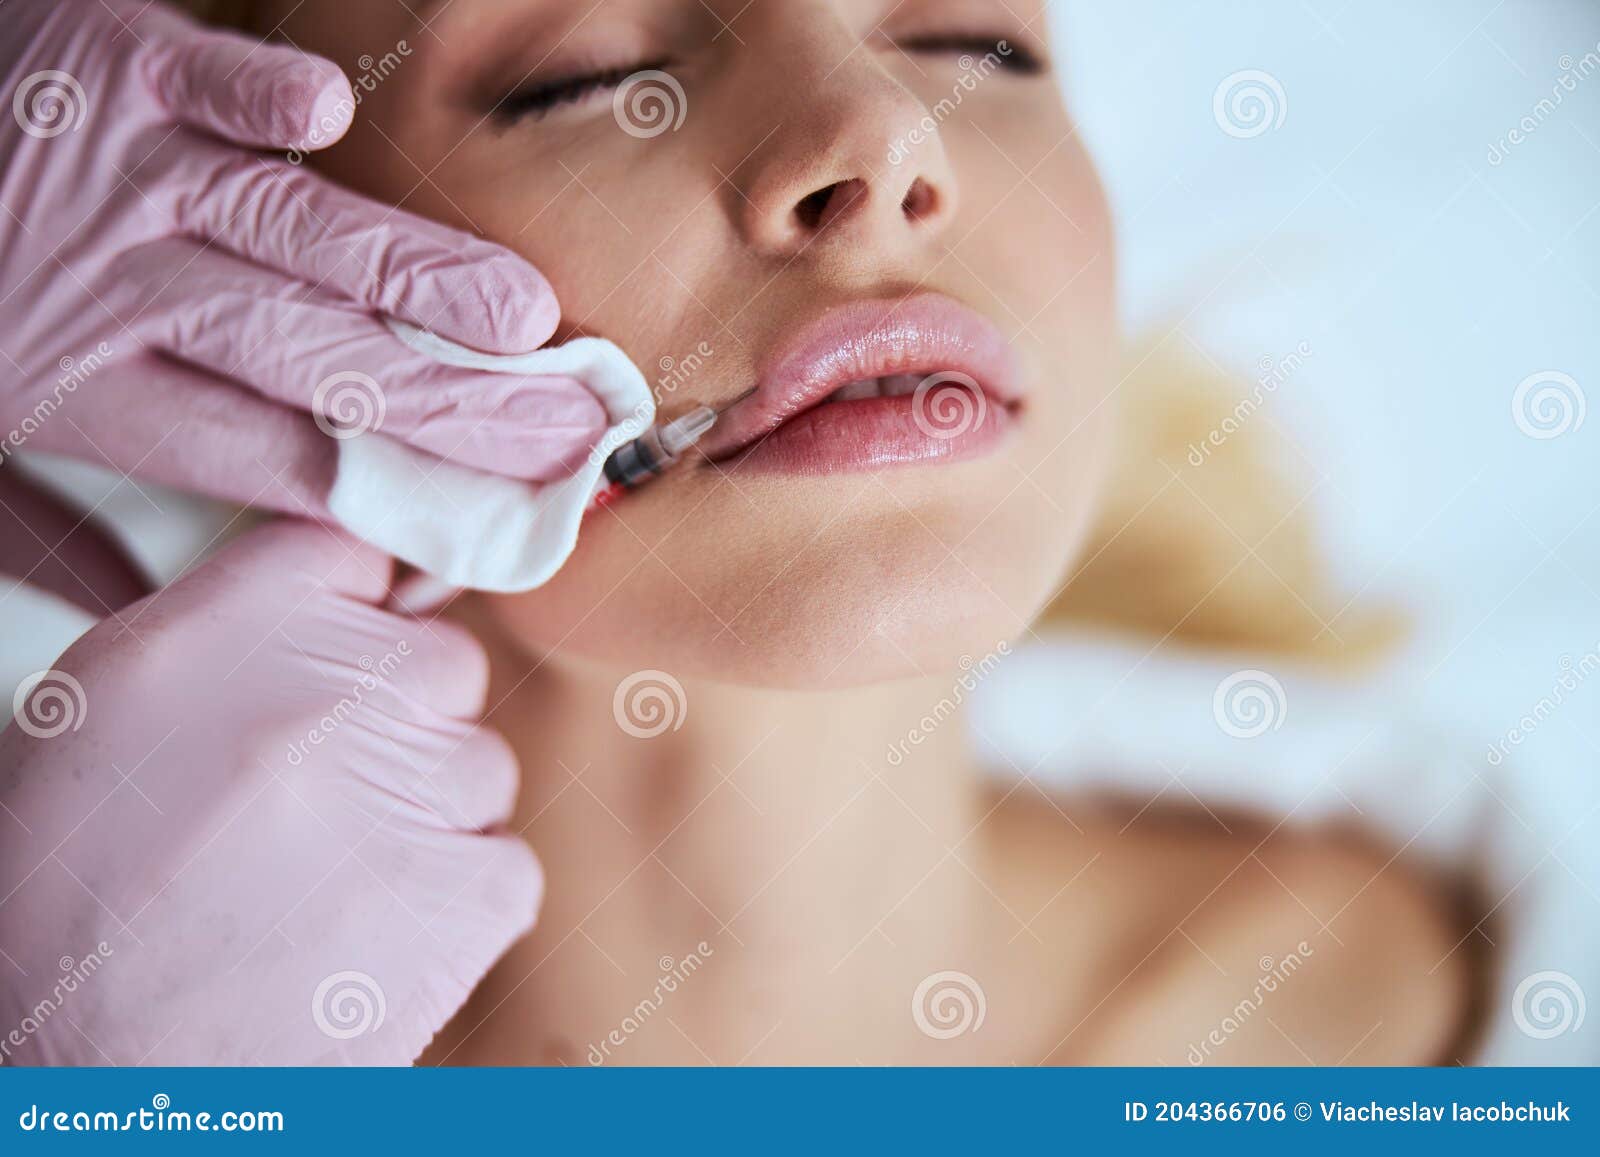 female patient undergoing the lip enhancement procedure